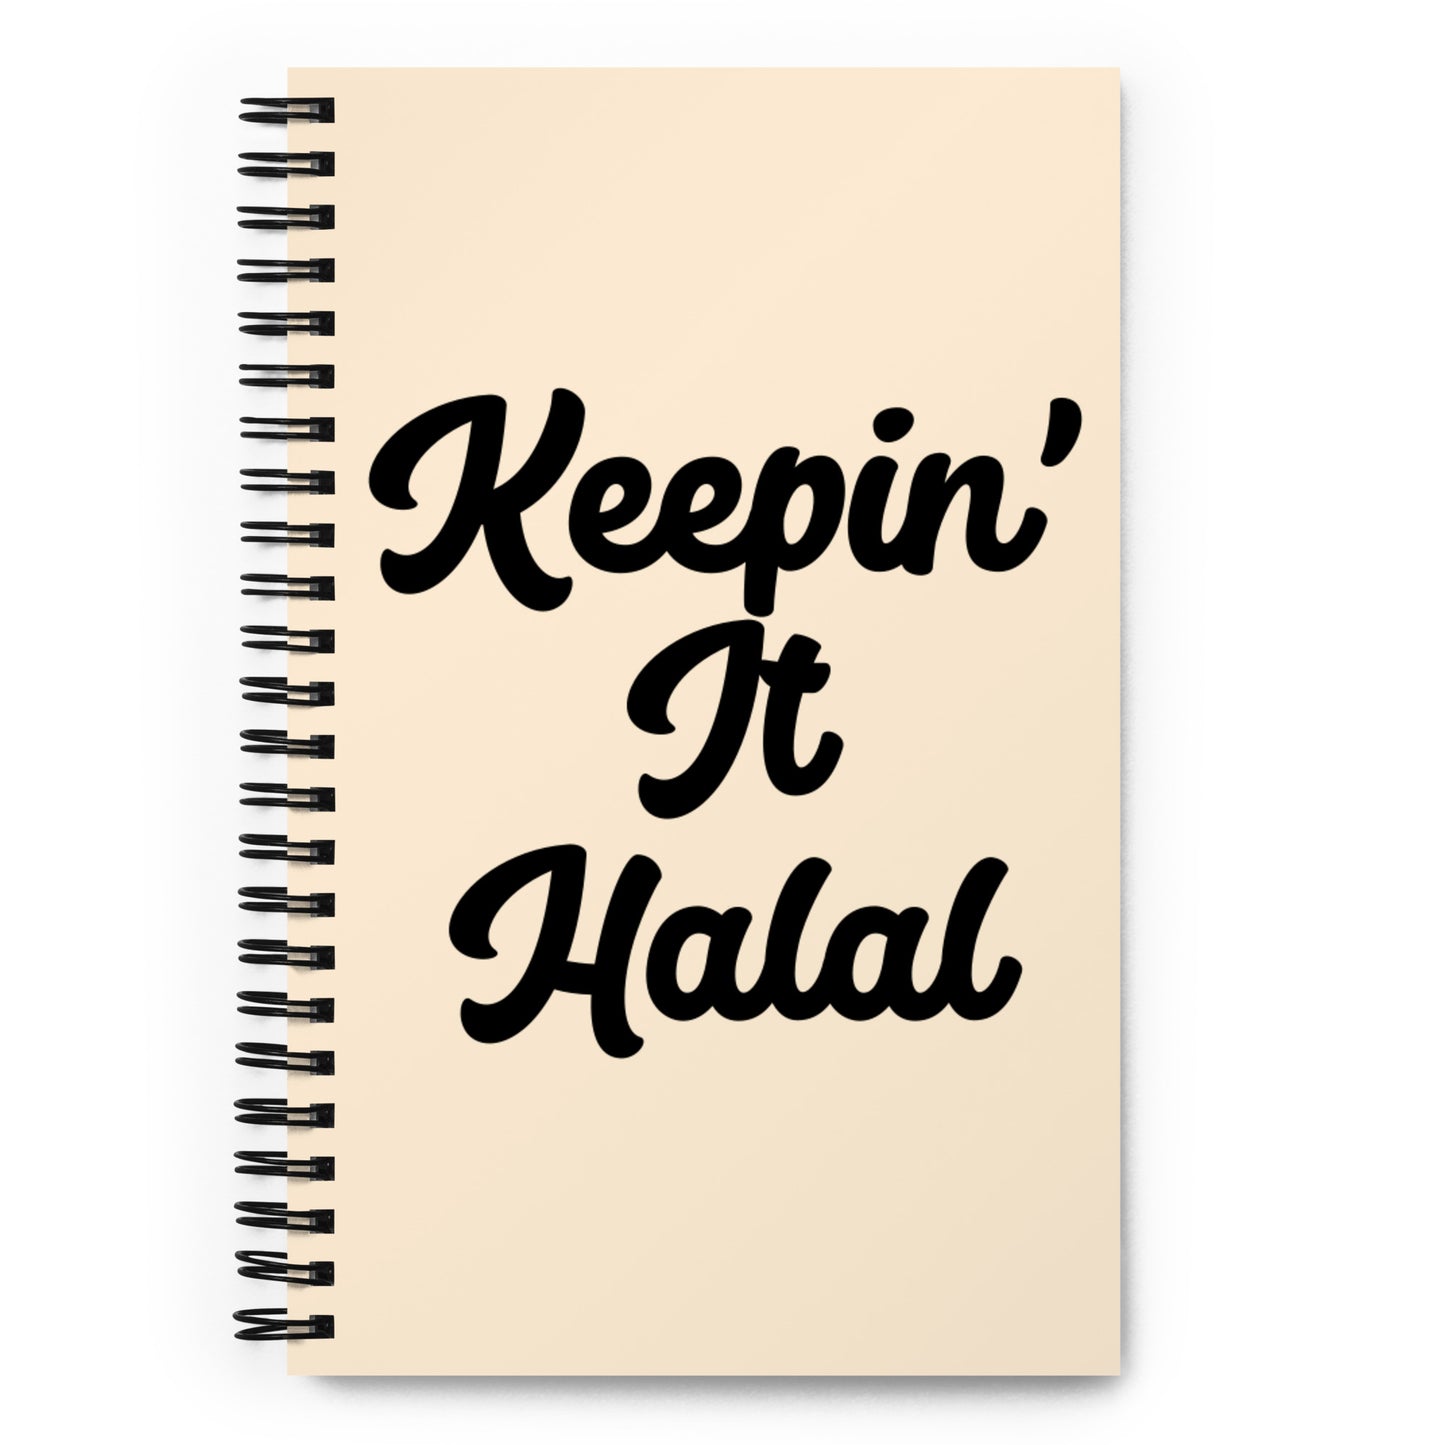 Keepin’ it halal Spiral notebook